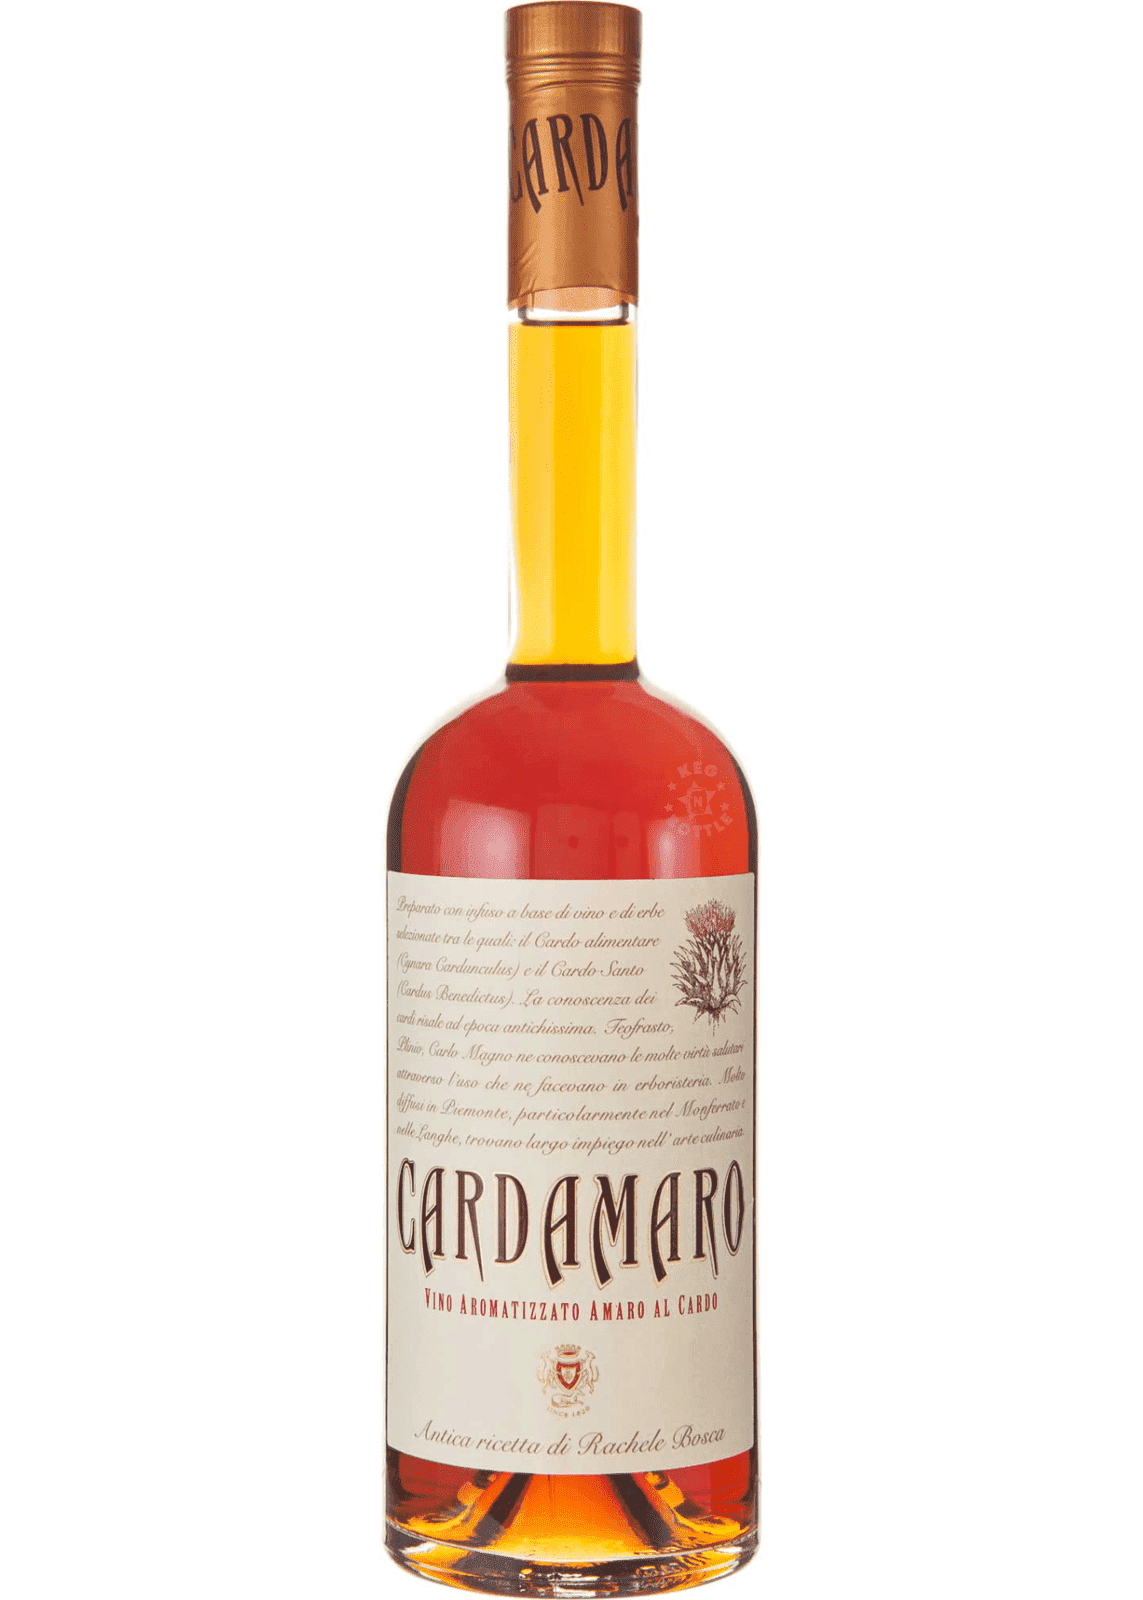 CARDAMARO Cardamaro Vino Aromatizzato Amaro Al Cardo